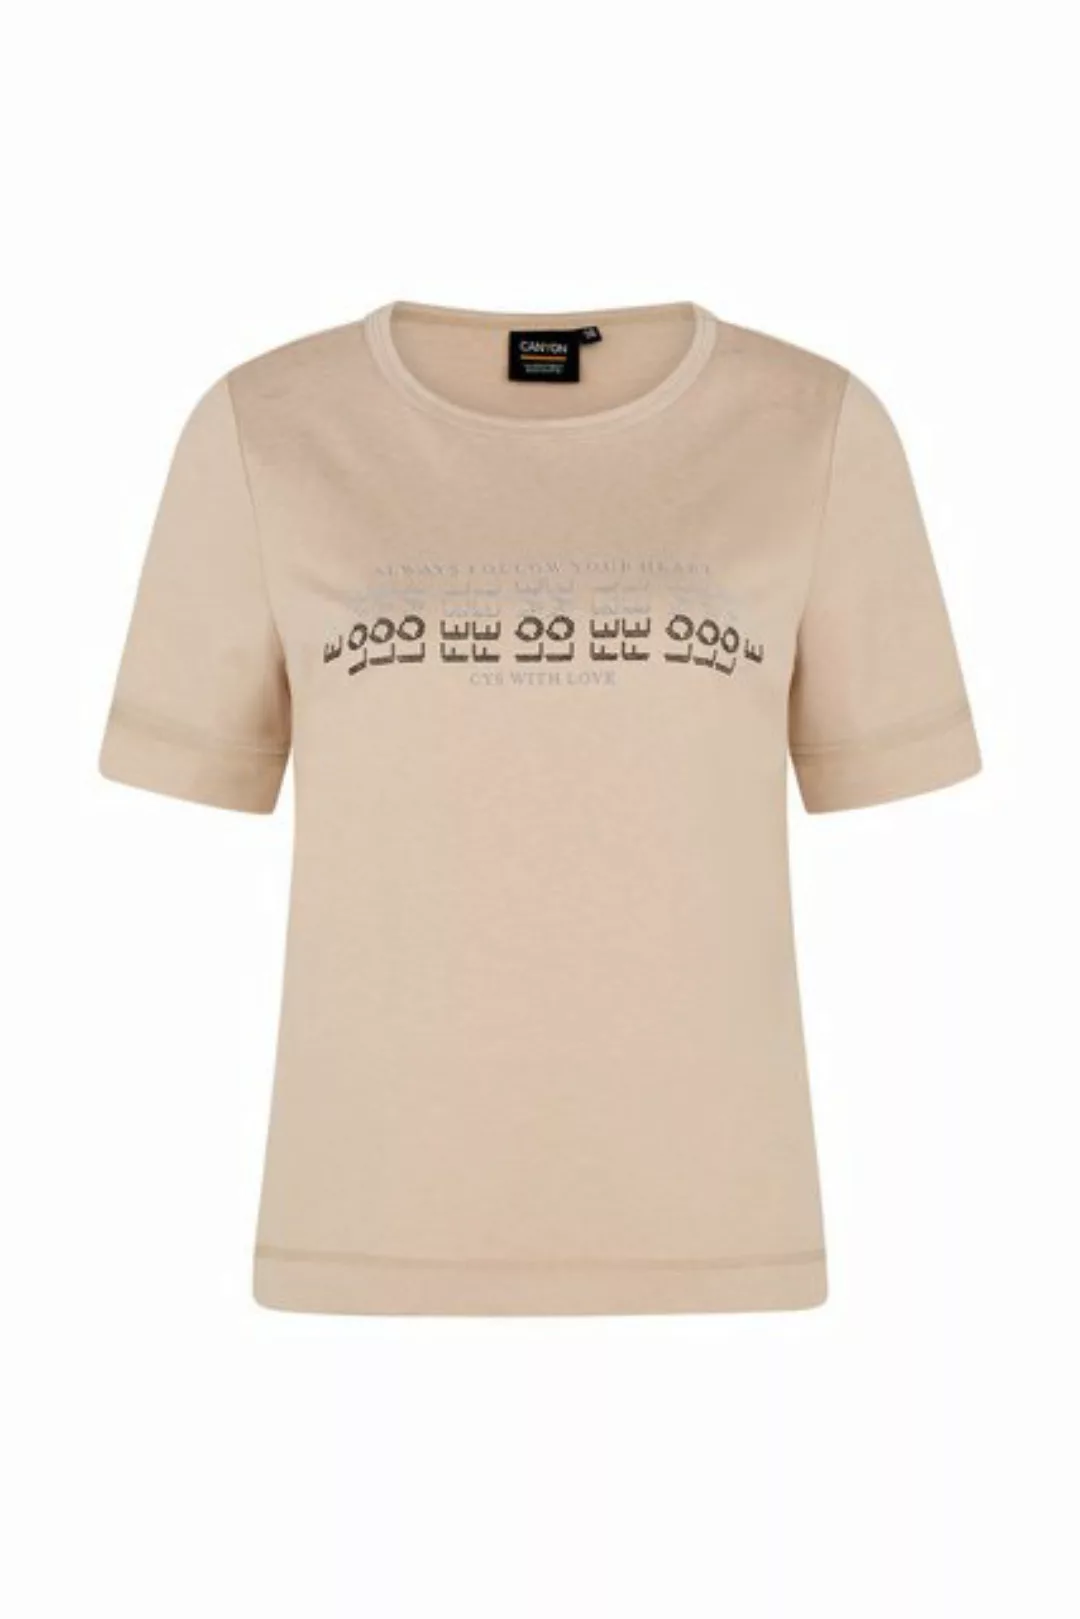 Canyon women sports T-Shirt 607008 günstig online kaufen